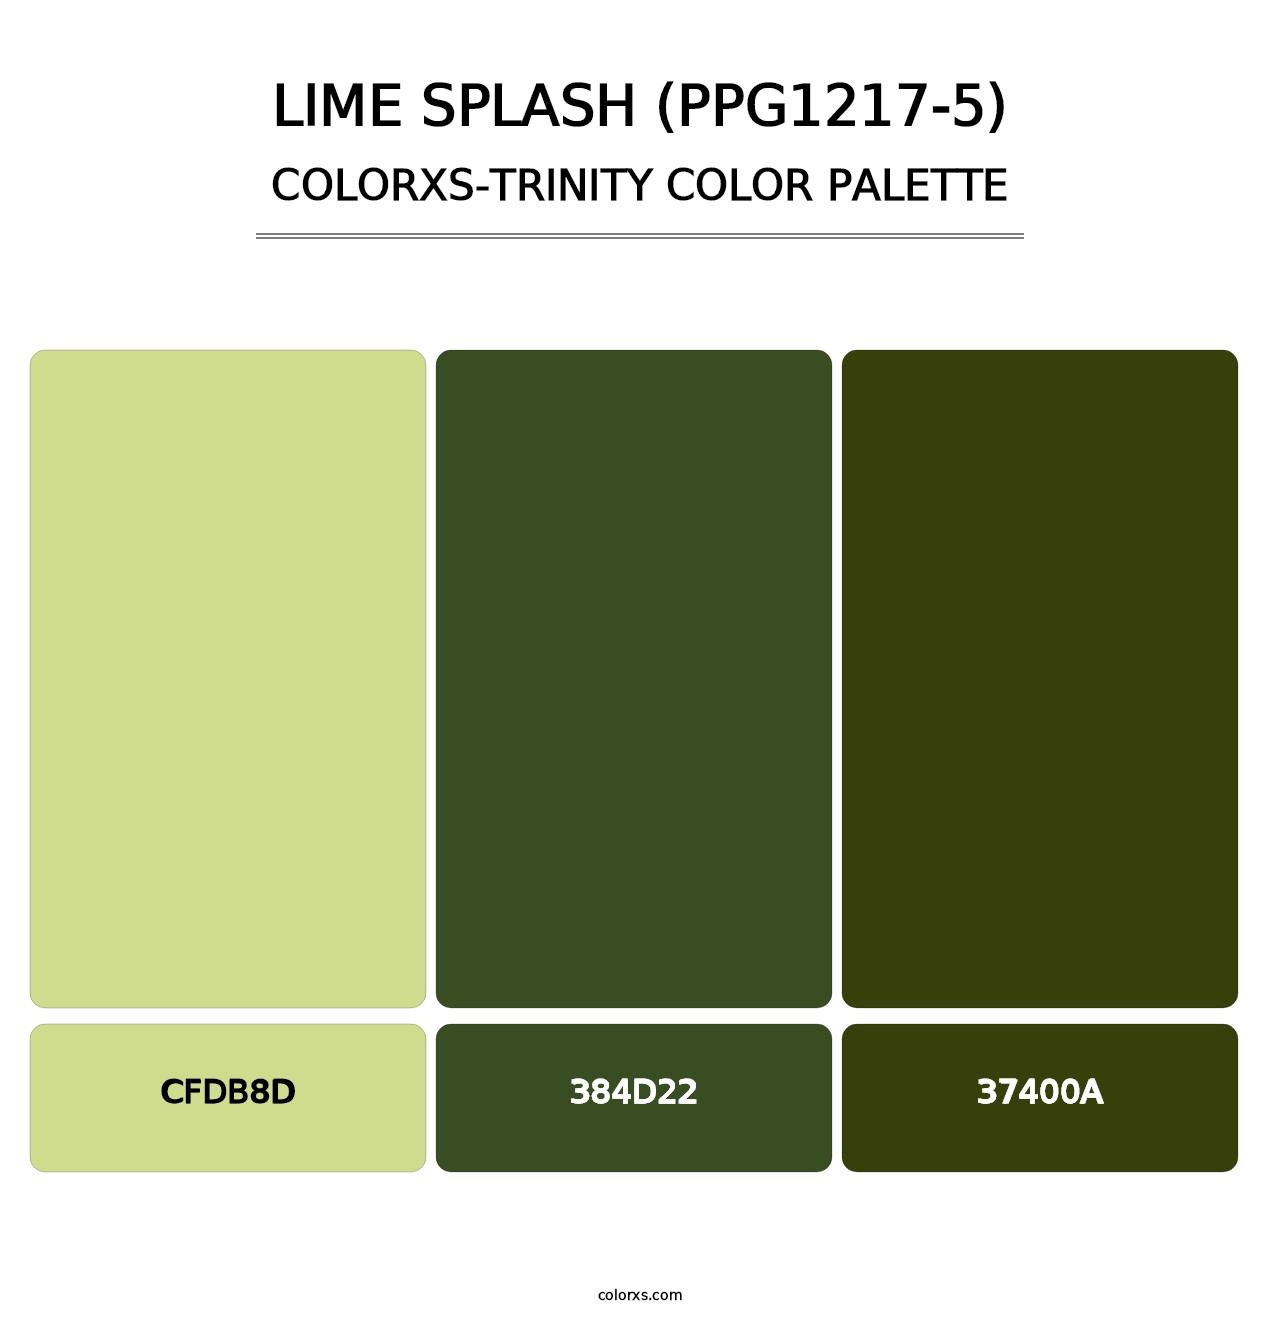 Lime Splash (PPG1217-5) - Colorxs Trinity Palette